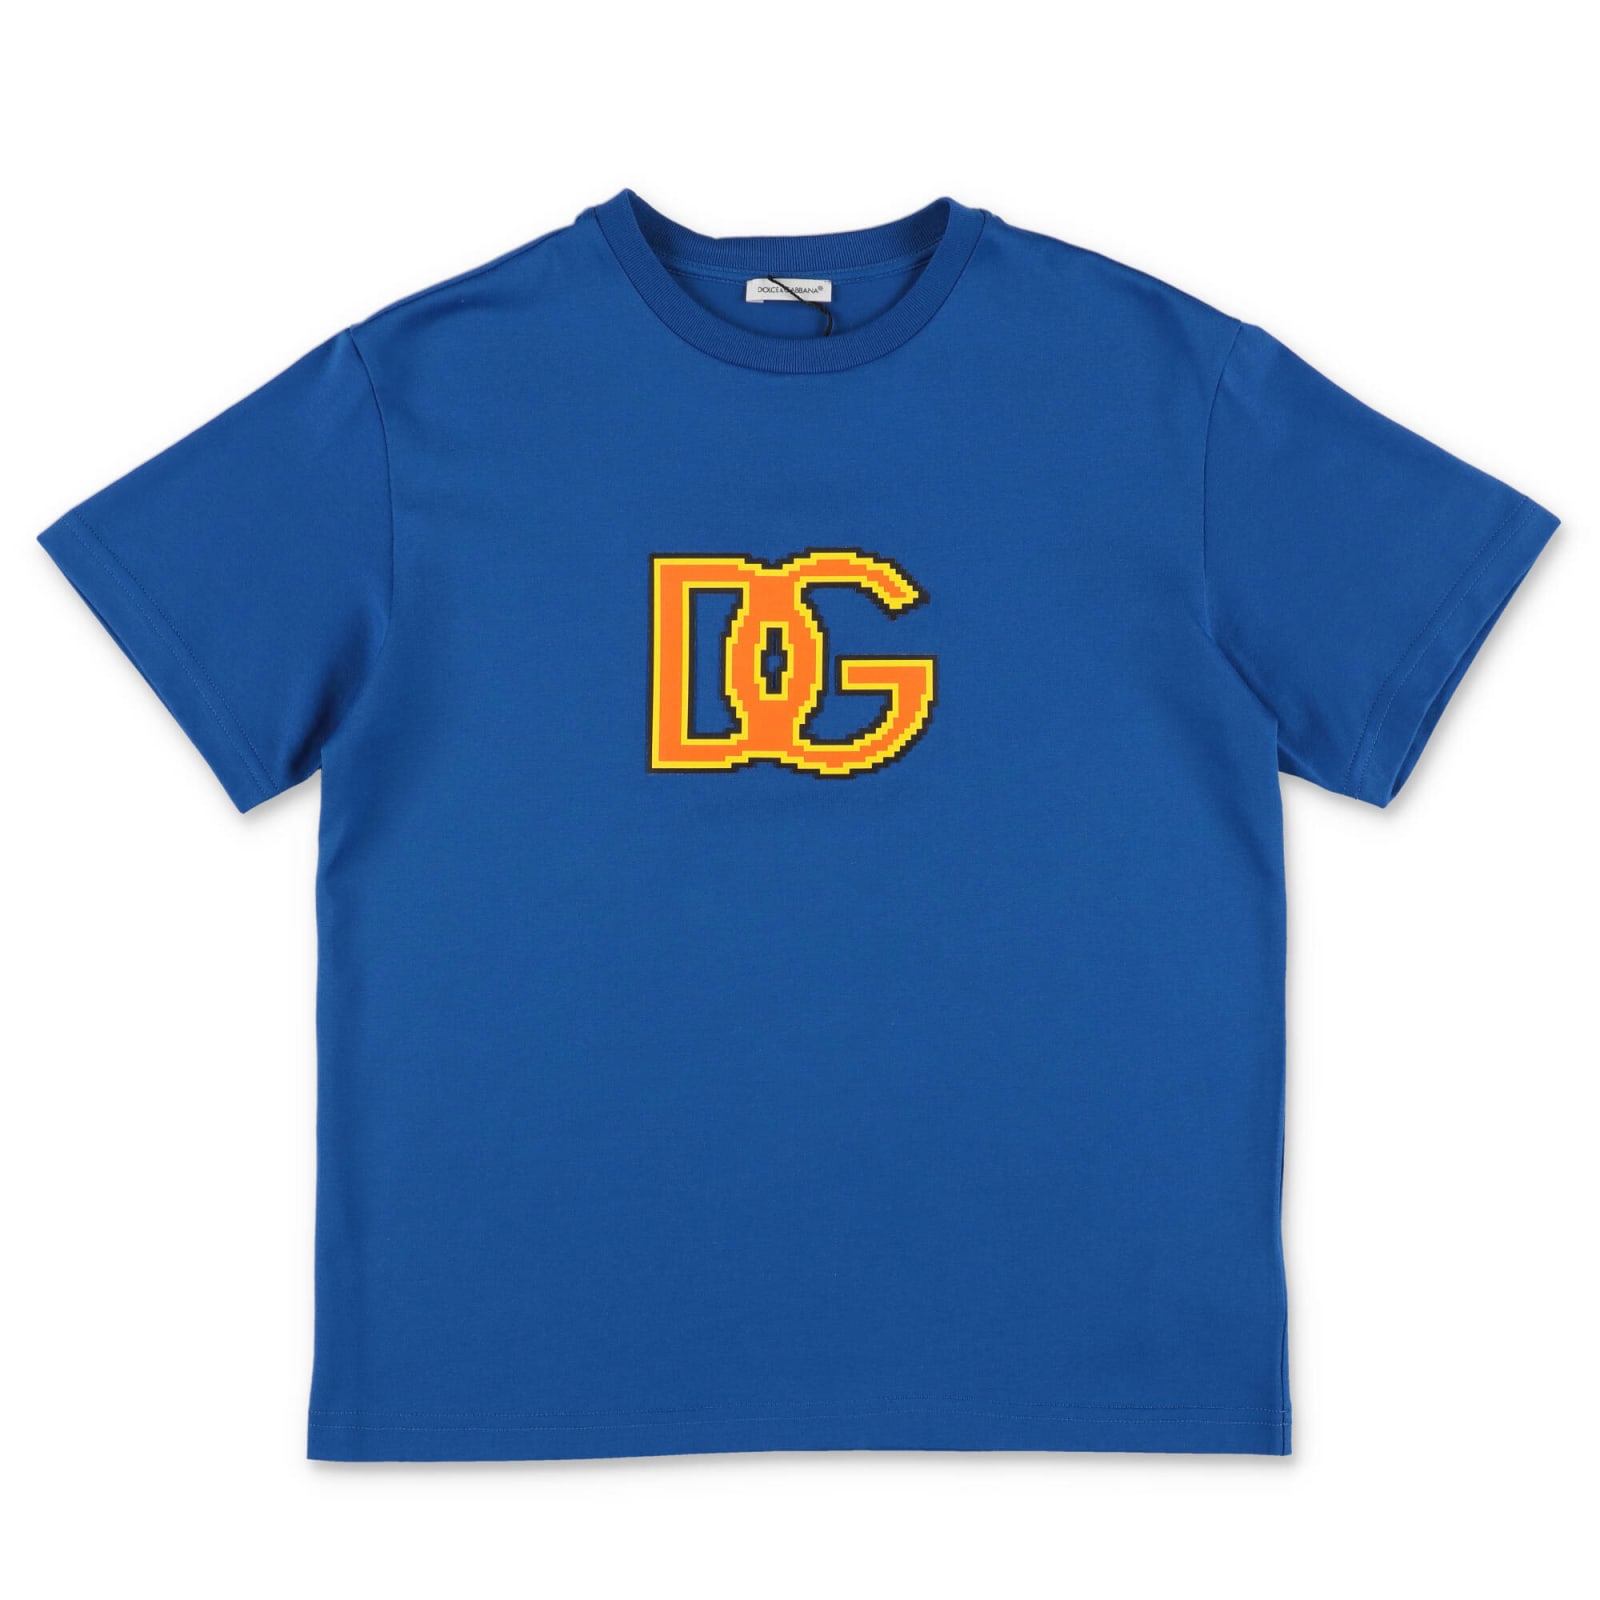 Dolce & Gabbana T-shirt Blu Royal In Jersey Di Cotone Bambino